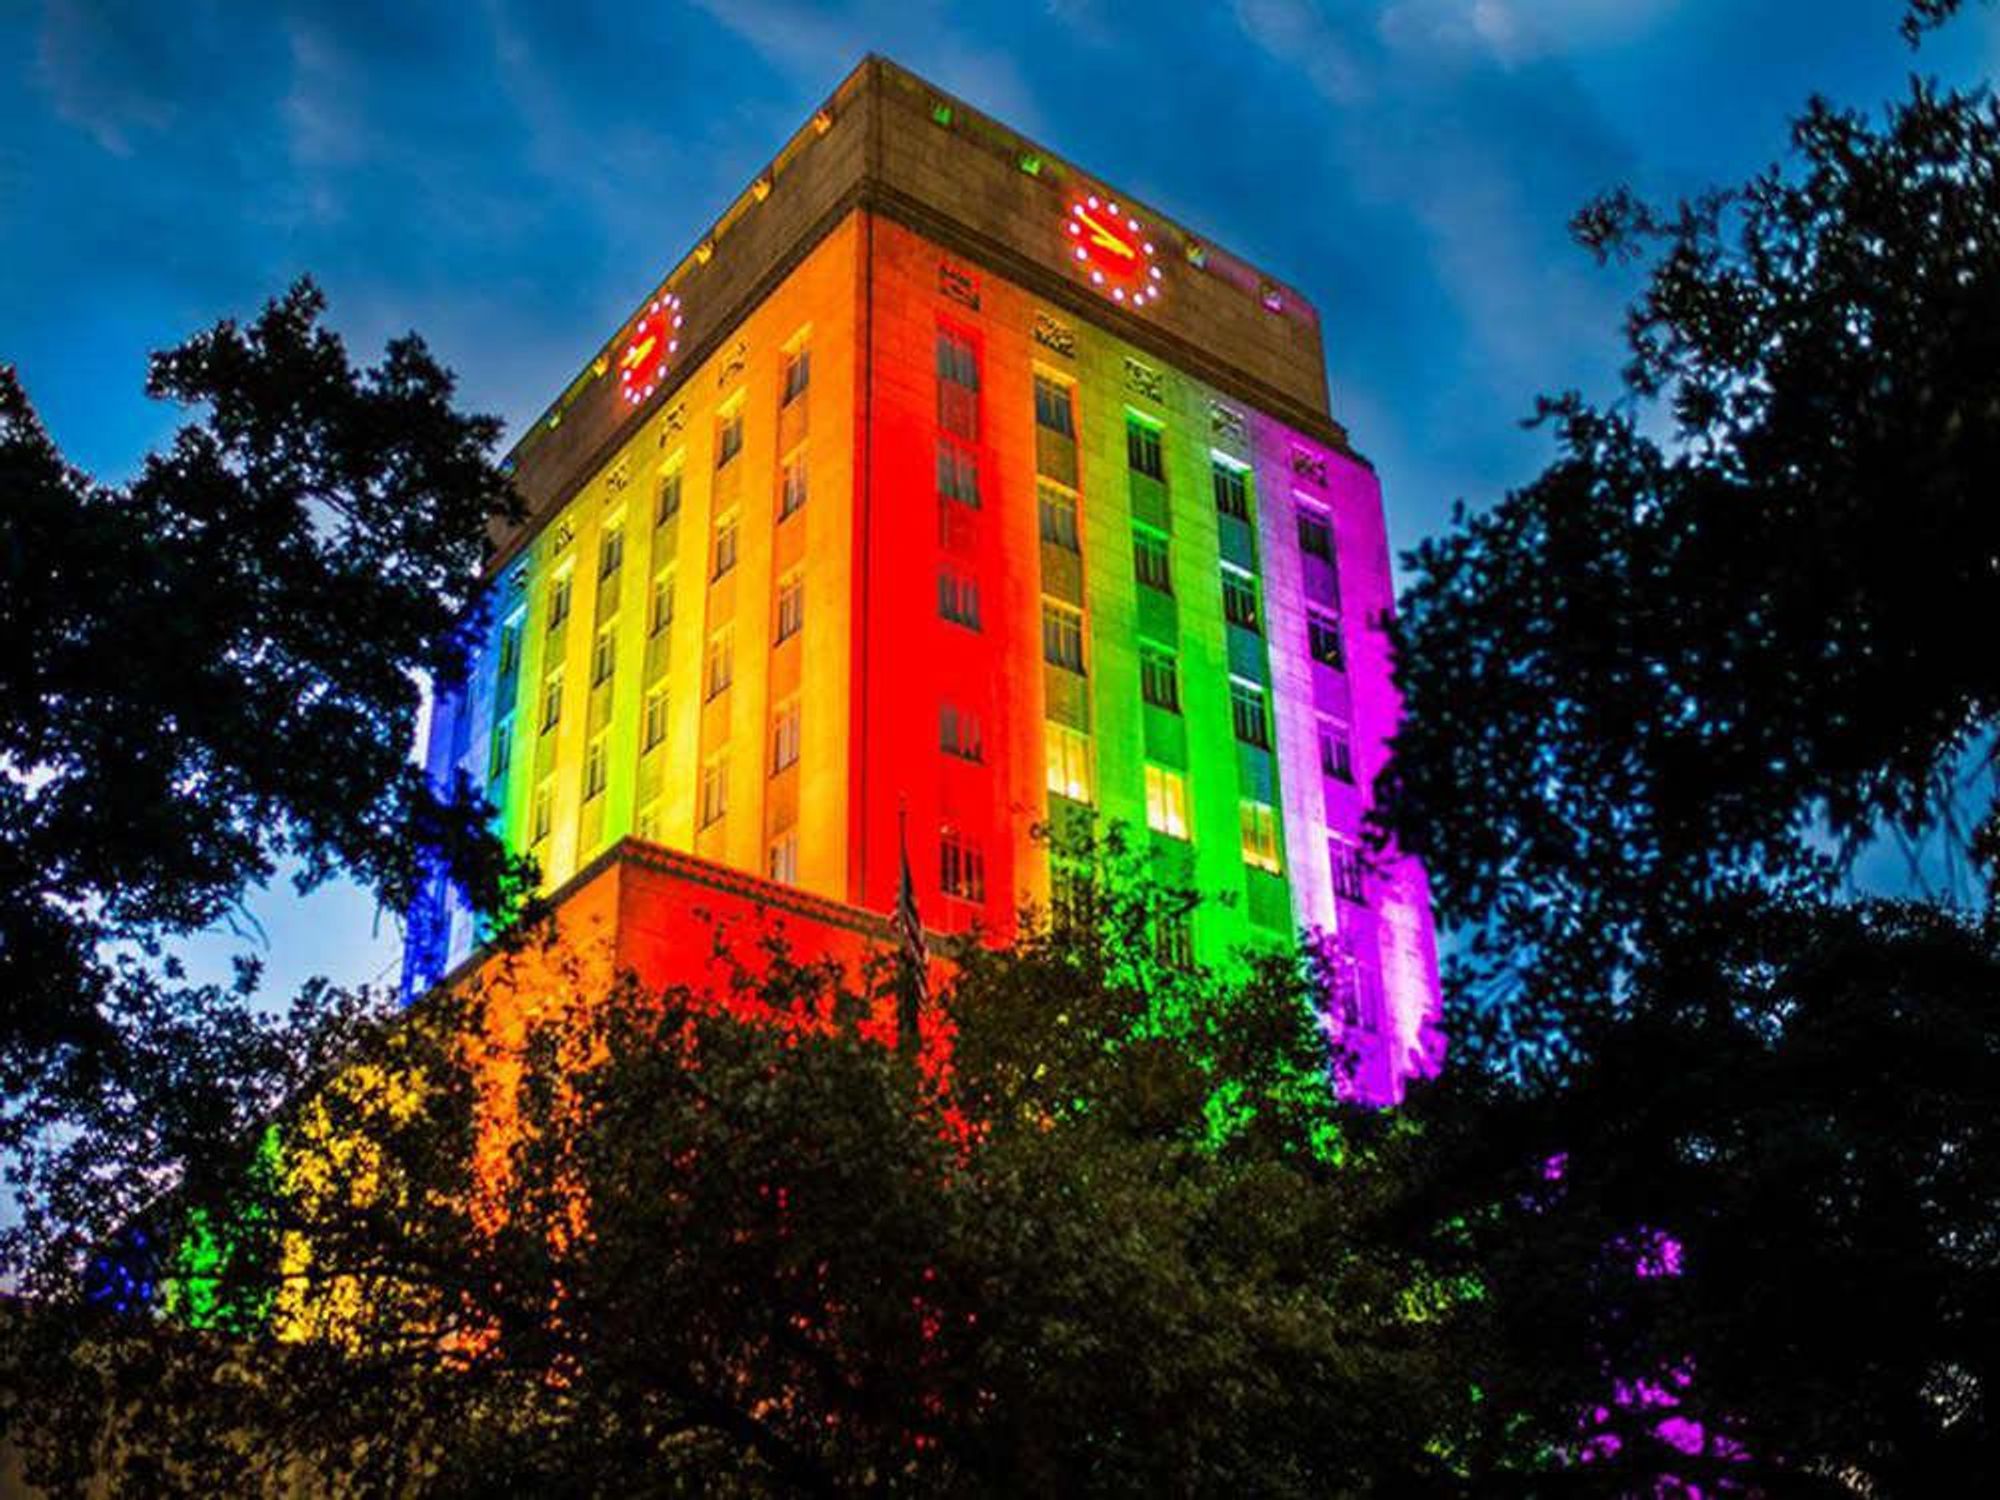 Pride Houston Presents The Official Houston LGBT Pride Celebration